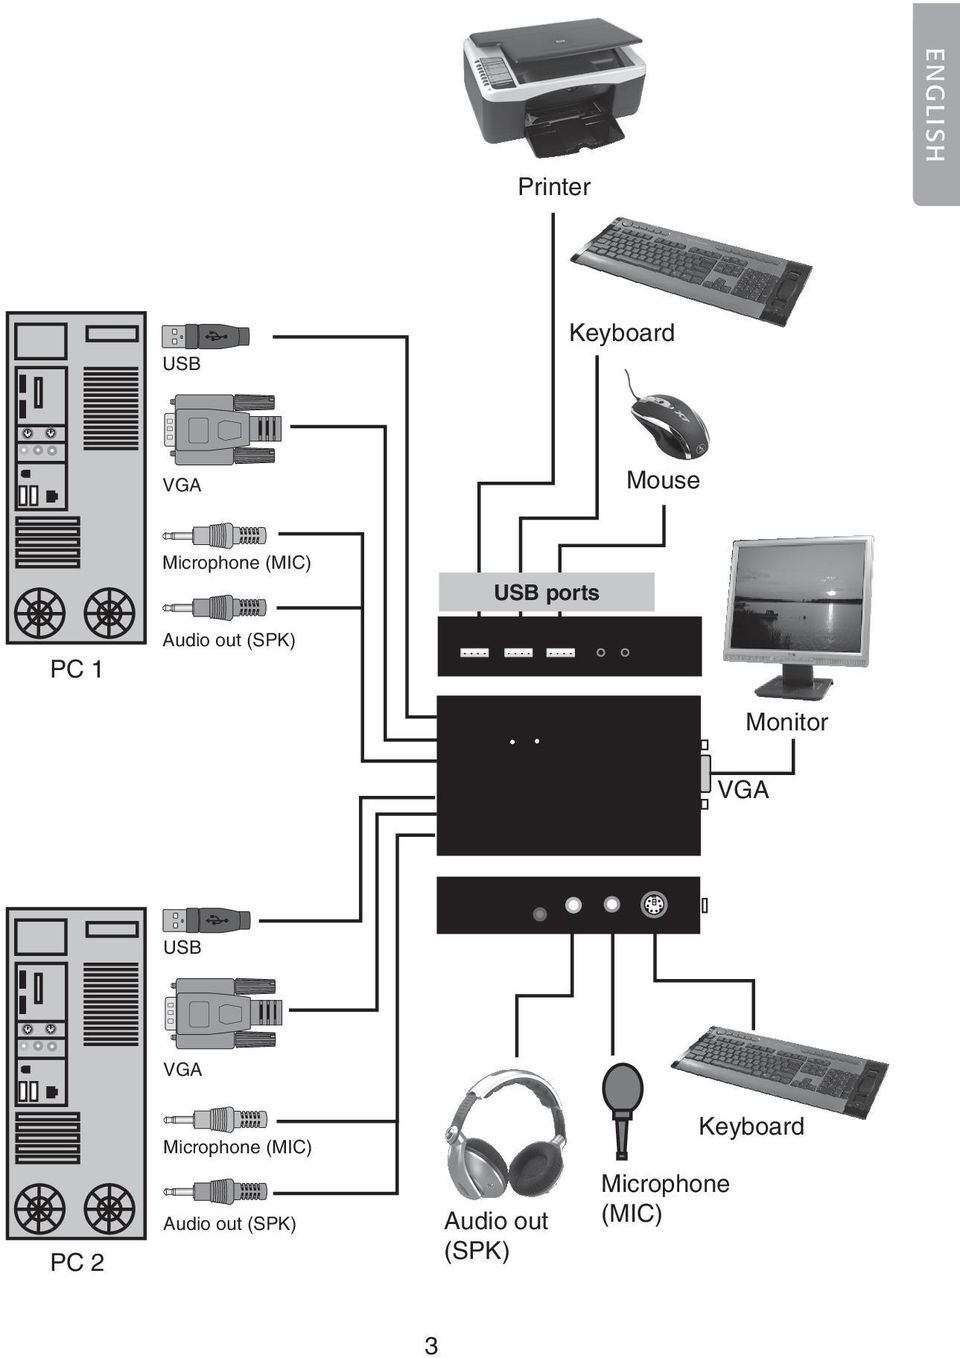 (SPK) Monitor PC 2 Microphone (MIC)